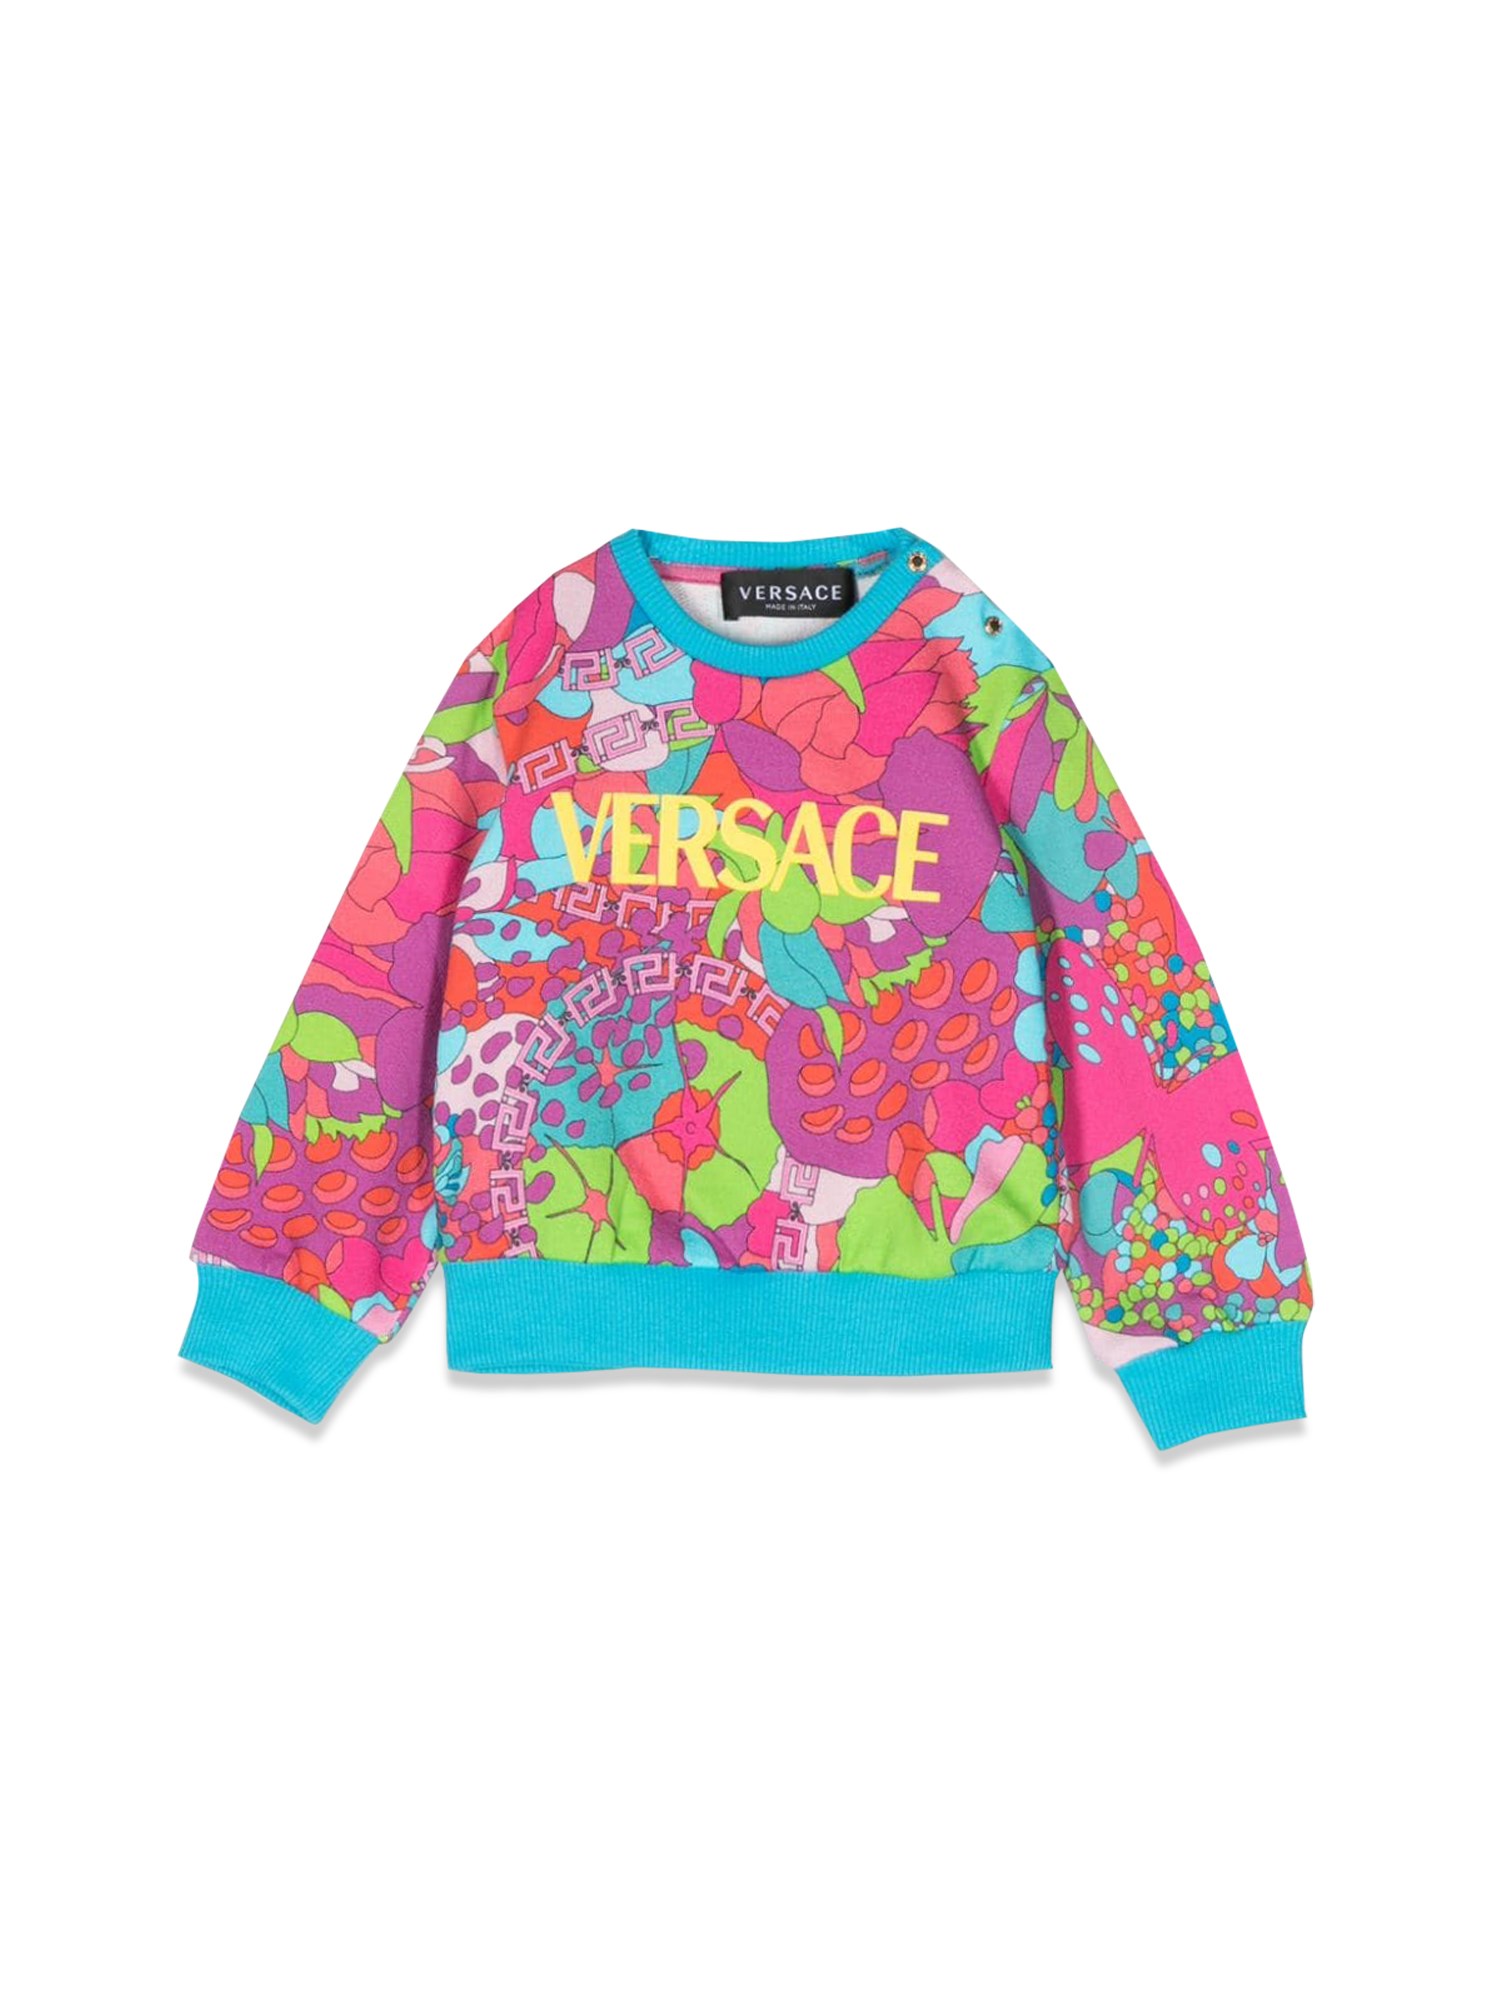 versace floral crewneck sweatshirt